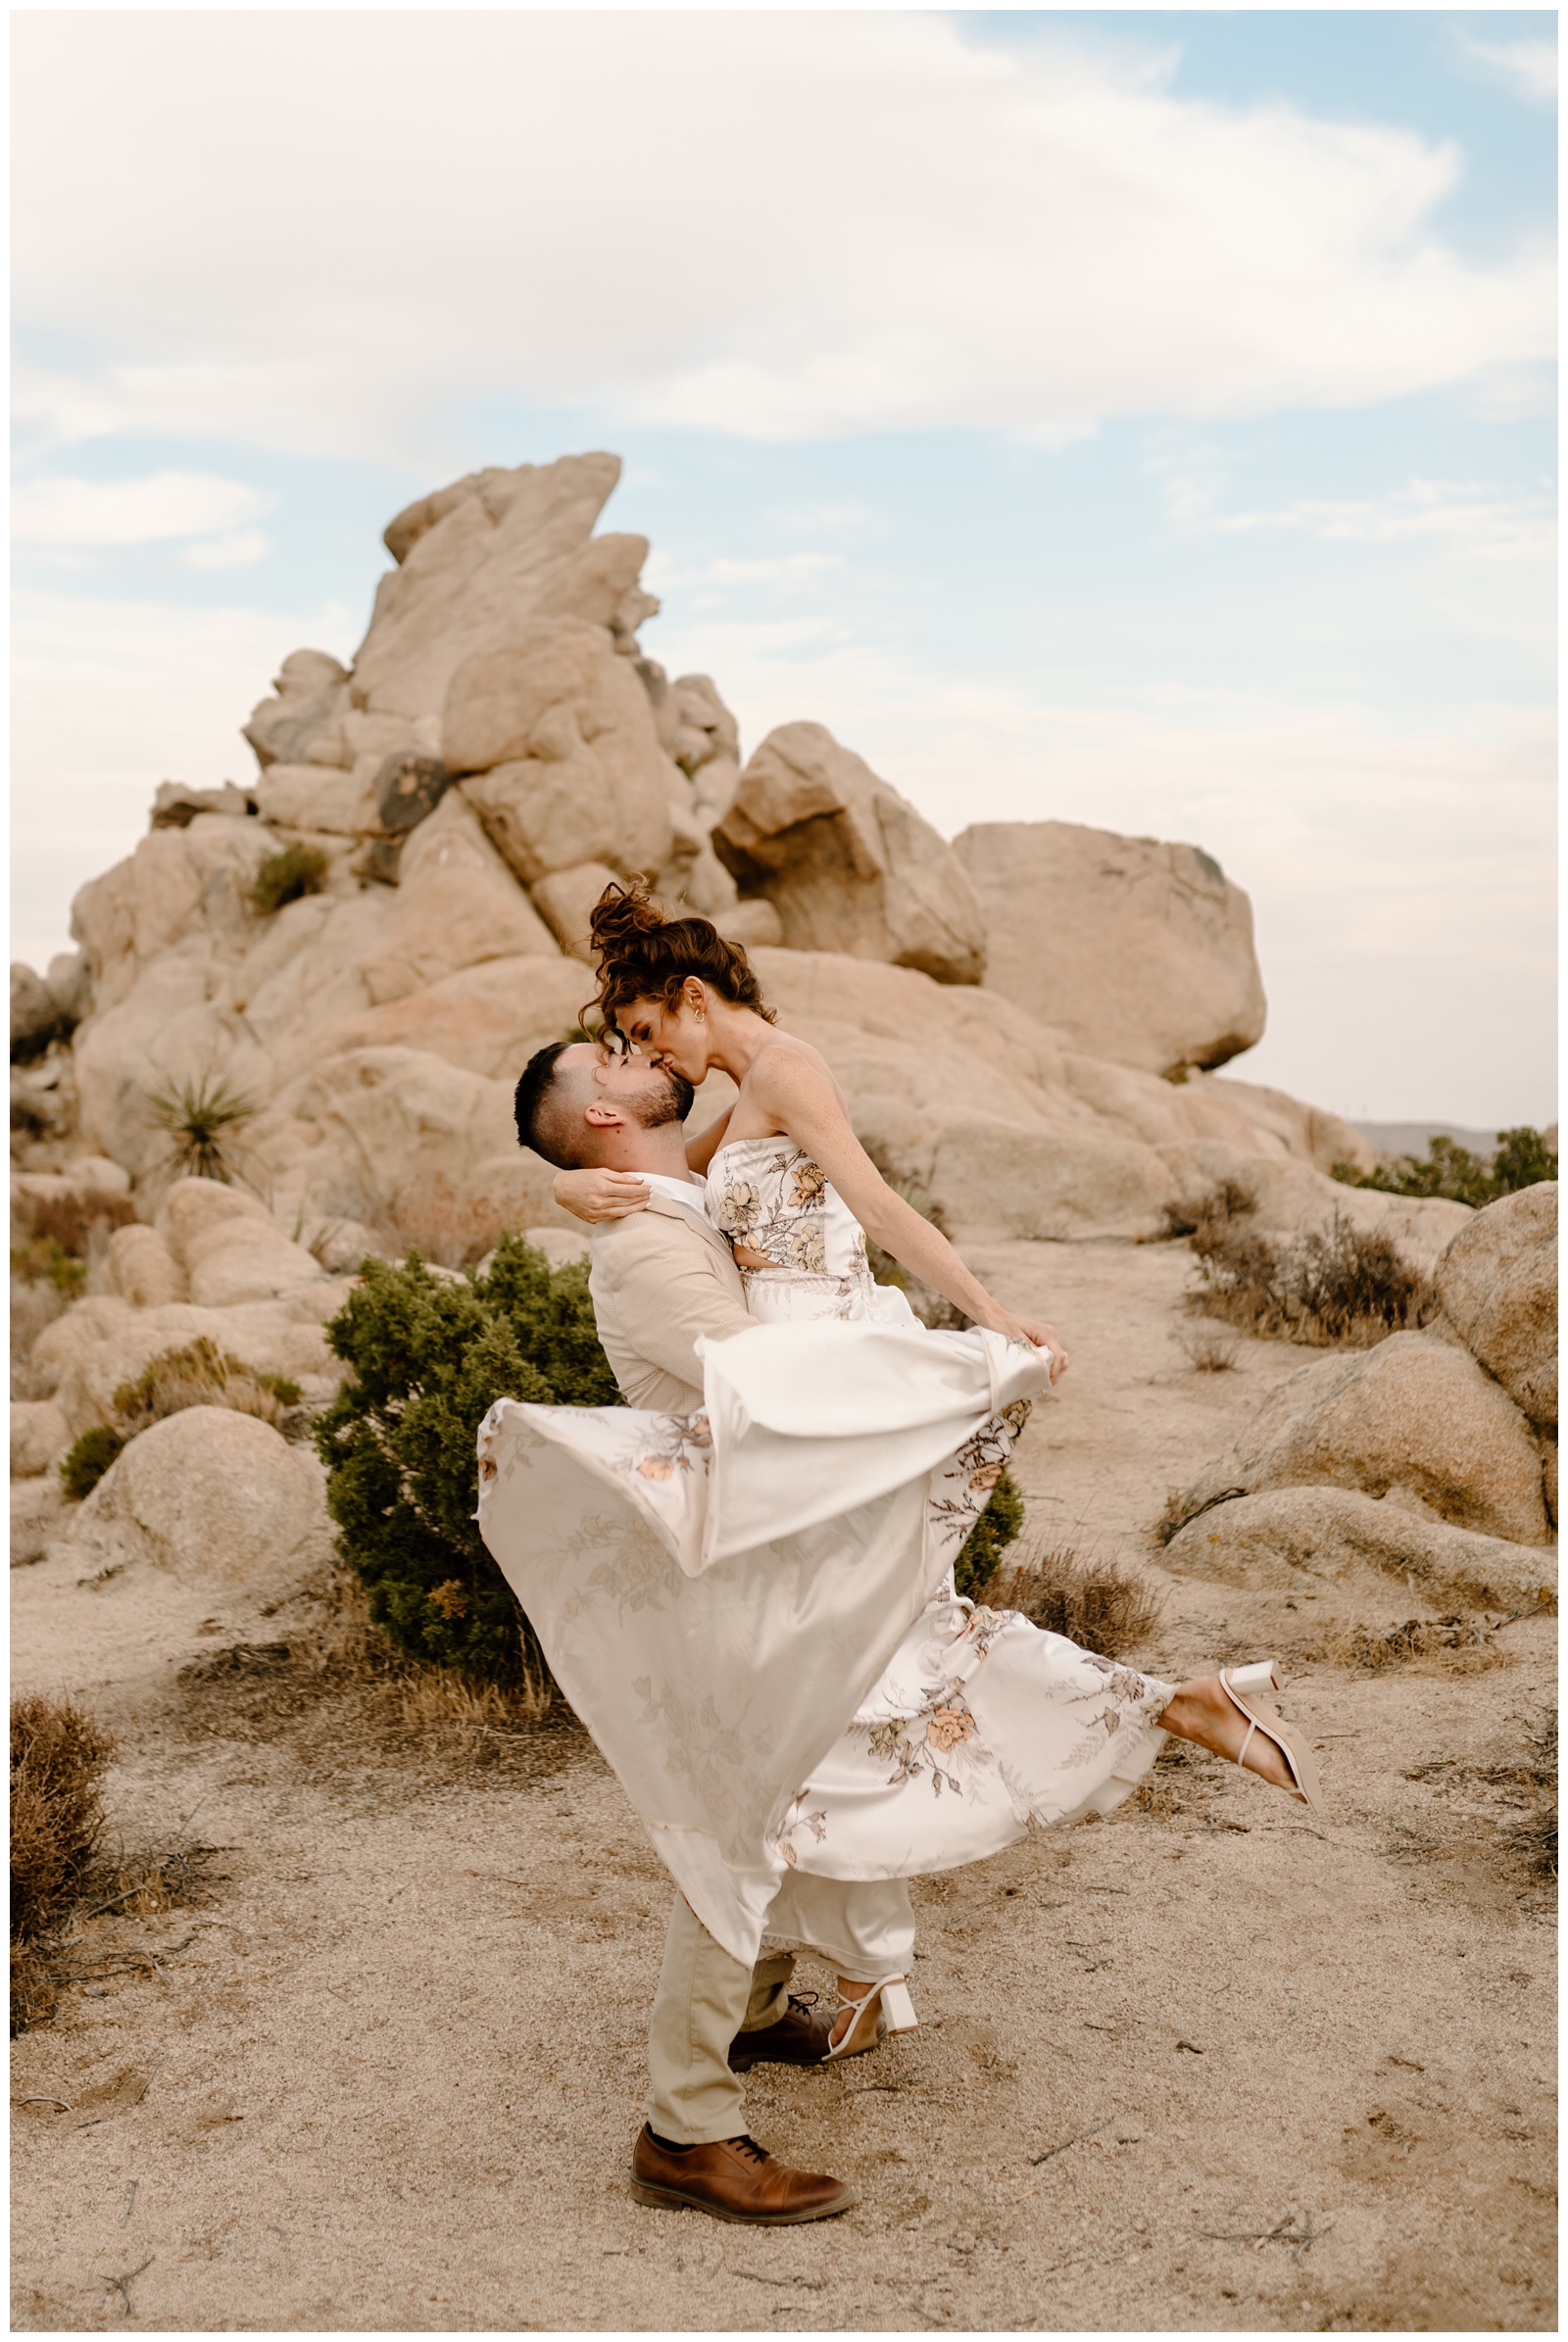 Fun desert elopement portraits in Joshua Tree by adventurous elopement photographer Kayli LaFon Photography